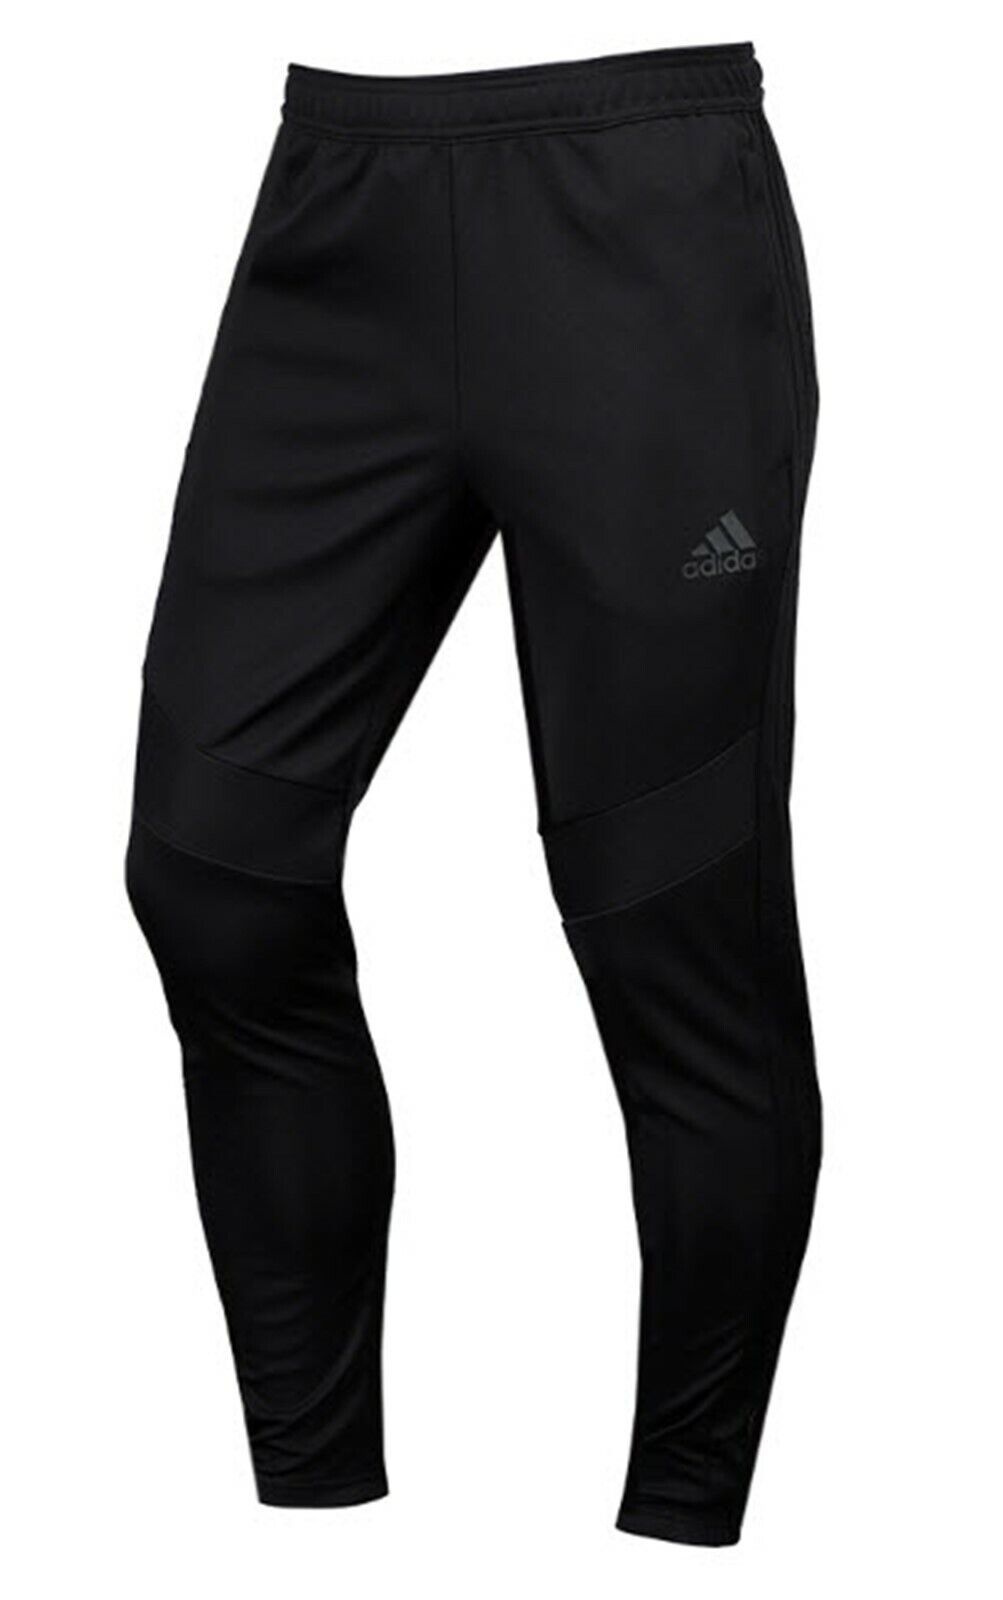 Adidas Men TIRO 19 Pants Training Black Running Tapered Casual 